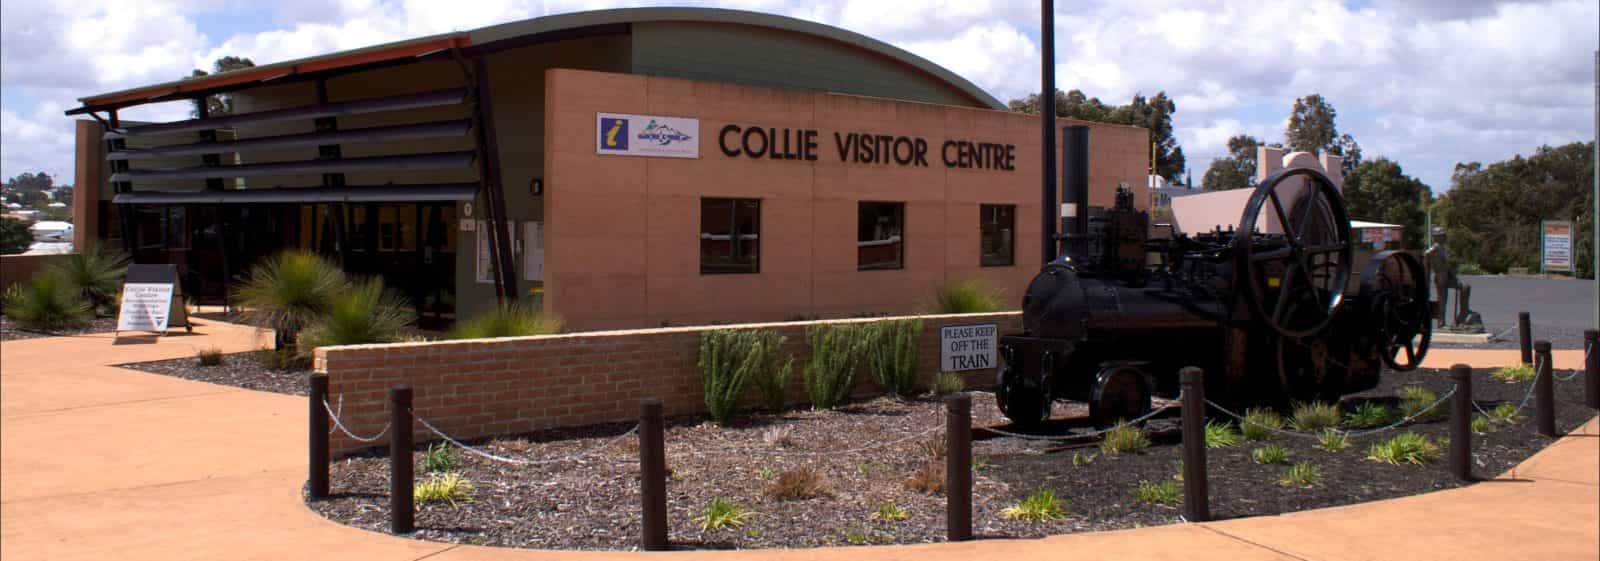 Collie River Valley Visitor Centre, Collie, Western Australia